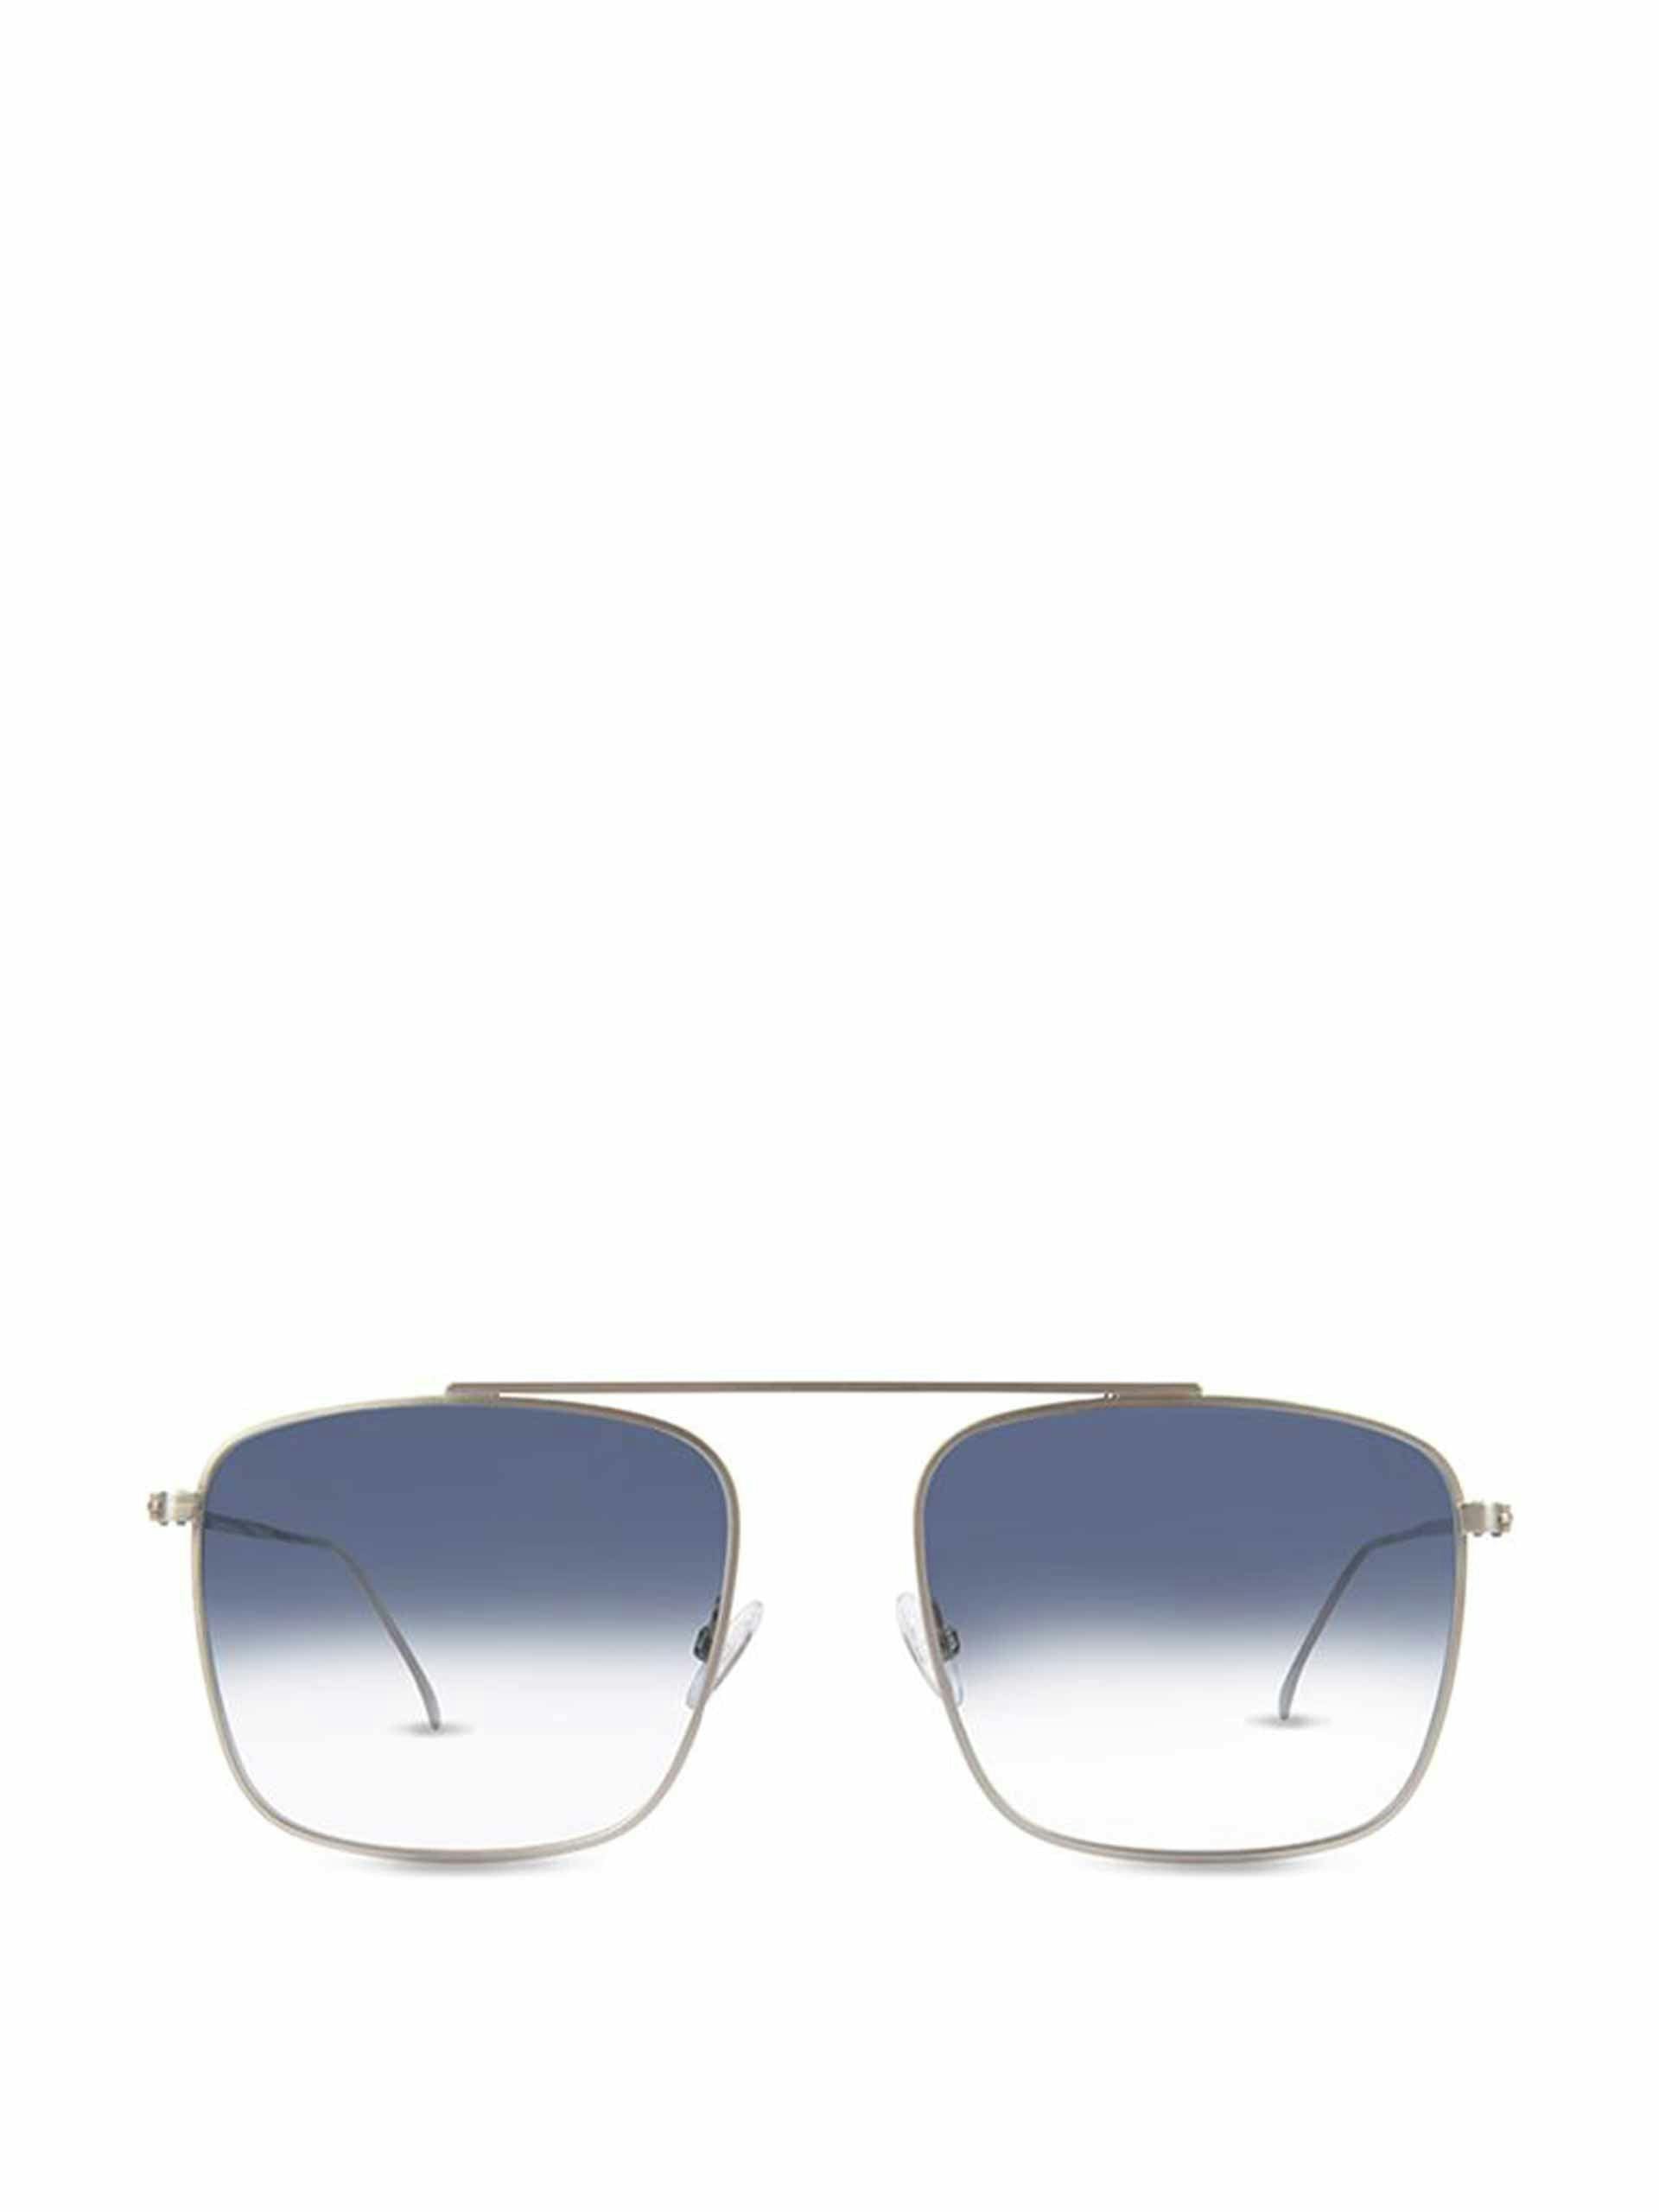 Parker silver frame sunglasses